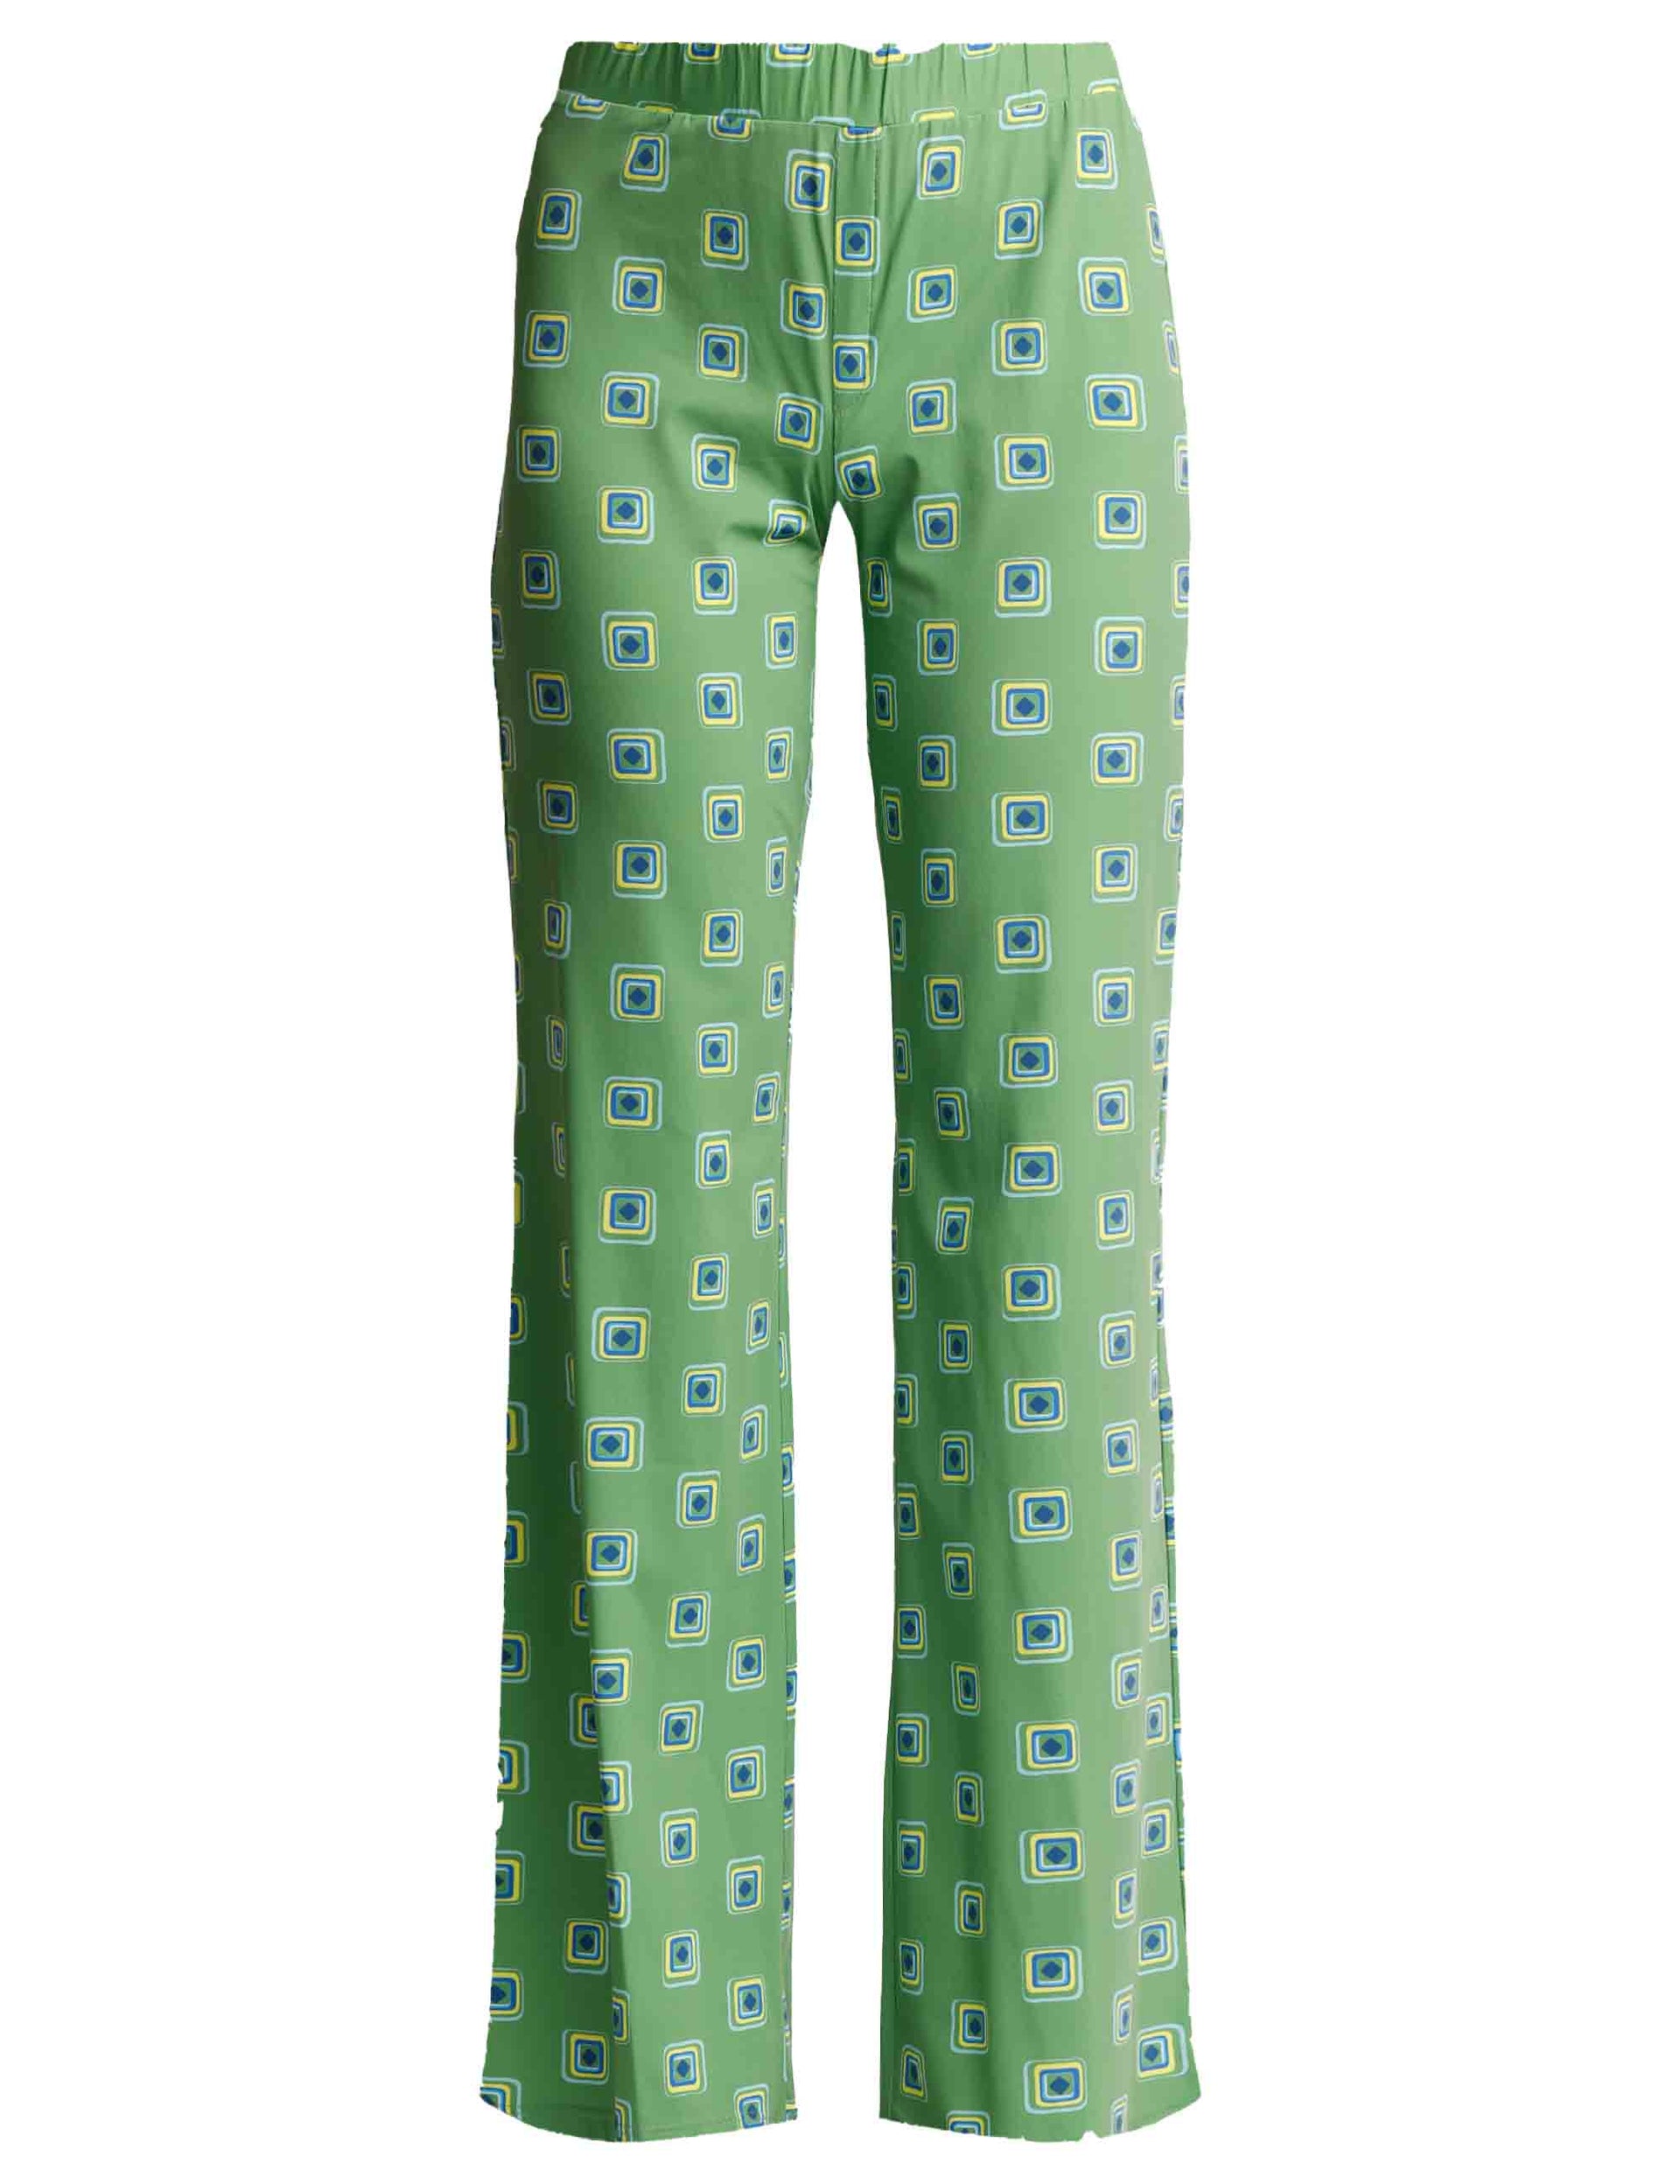 Marigold women's trousers in green patterned jersey